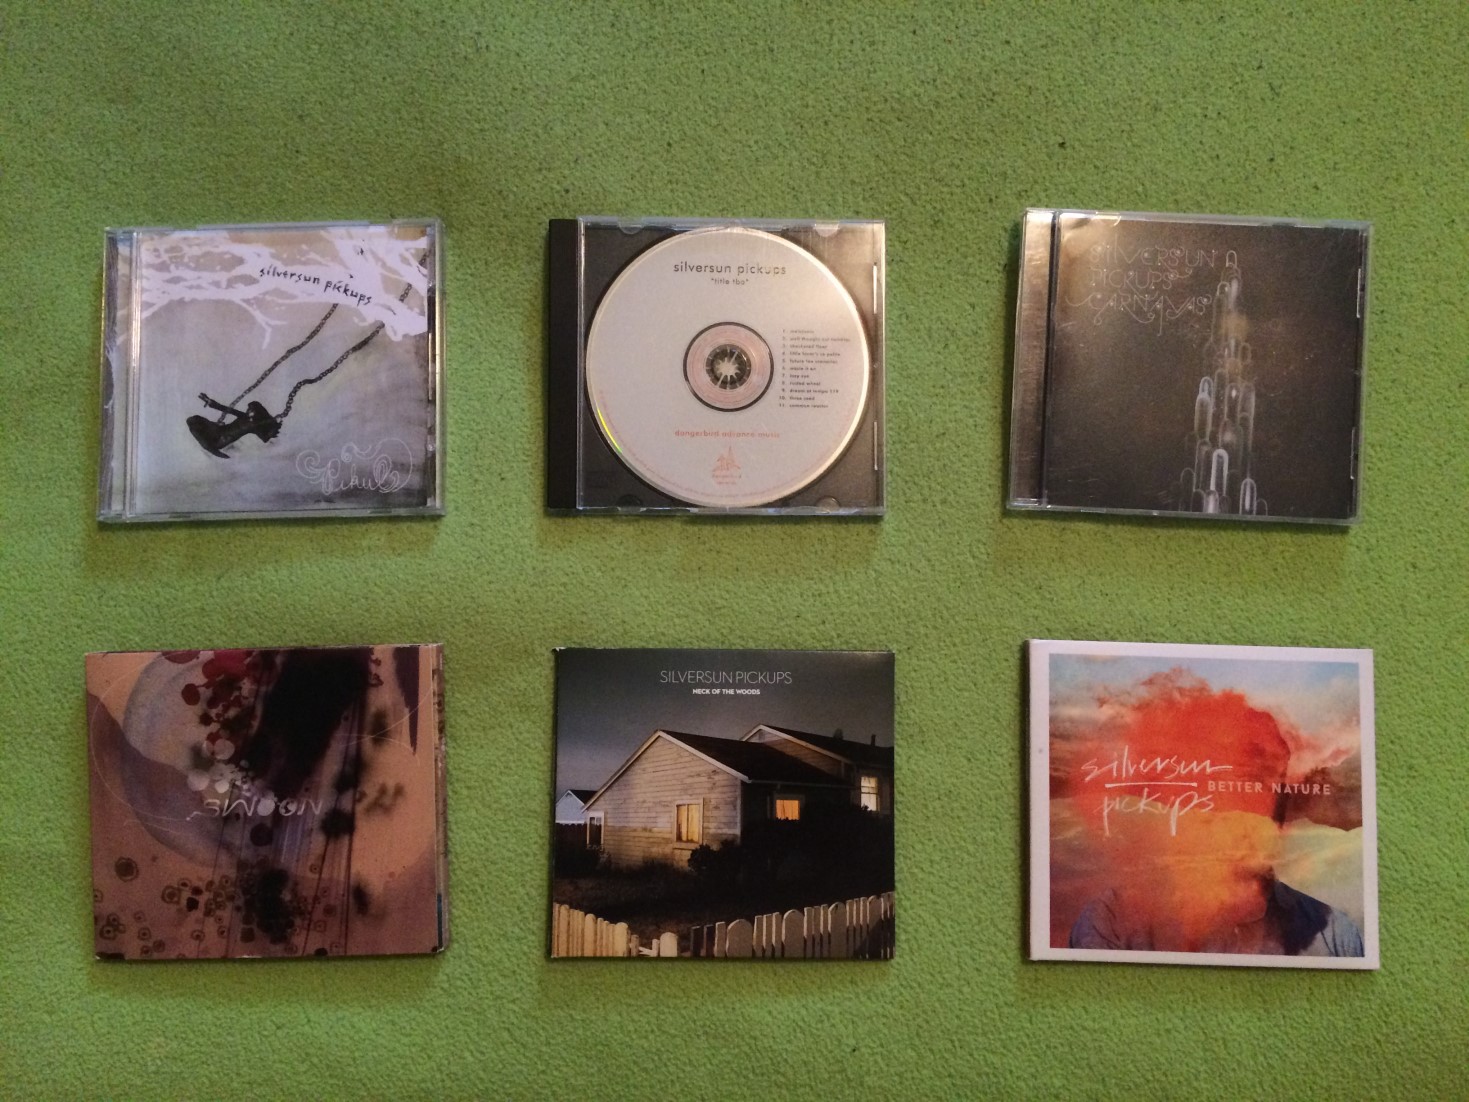 Silversun Pickups CDs